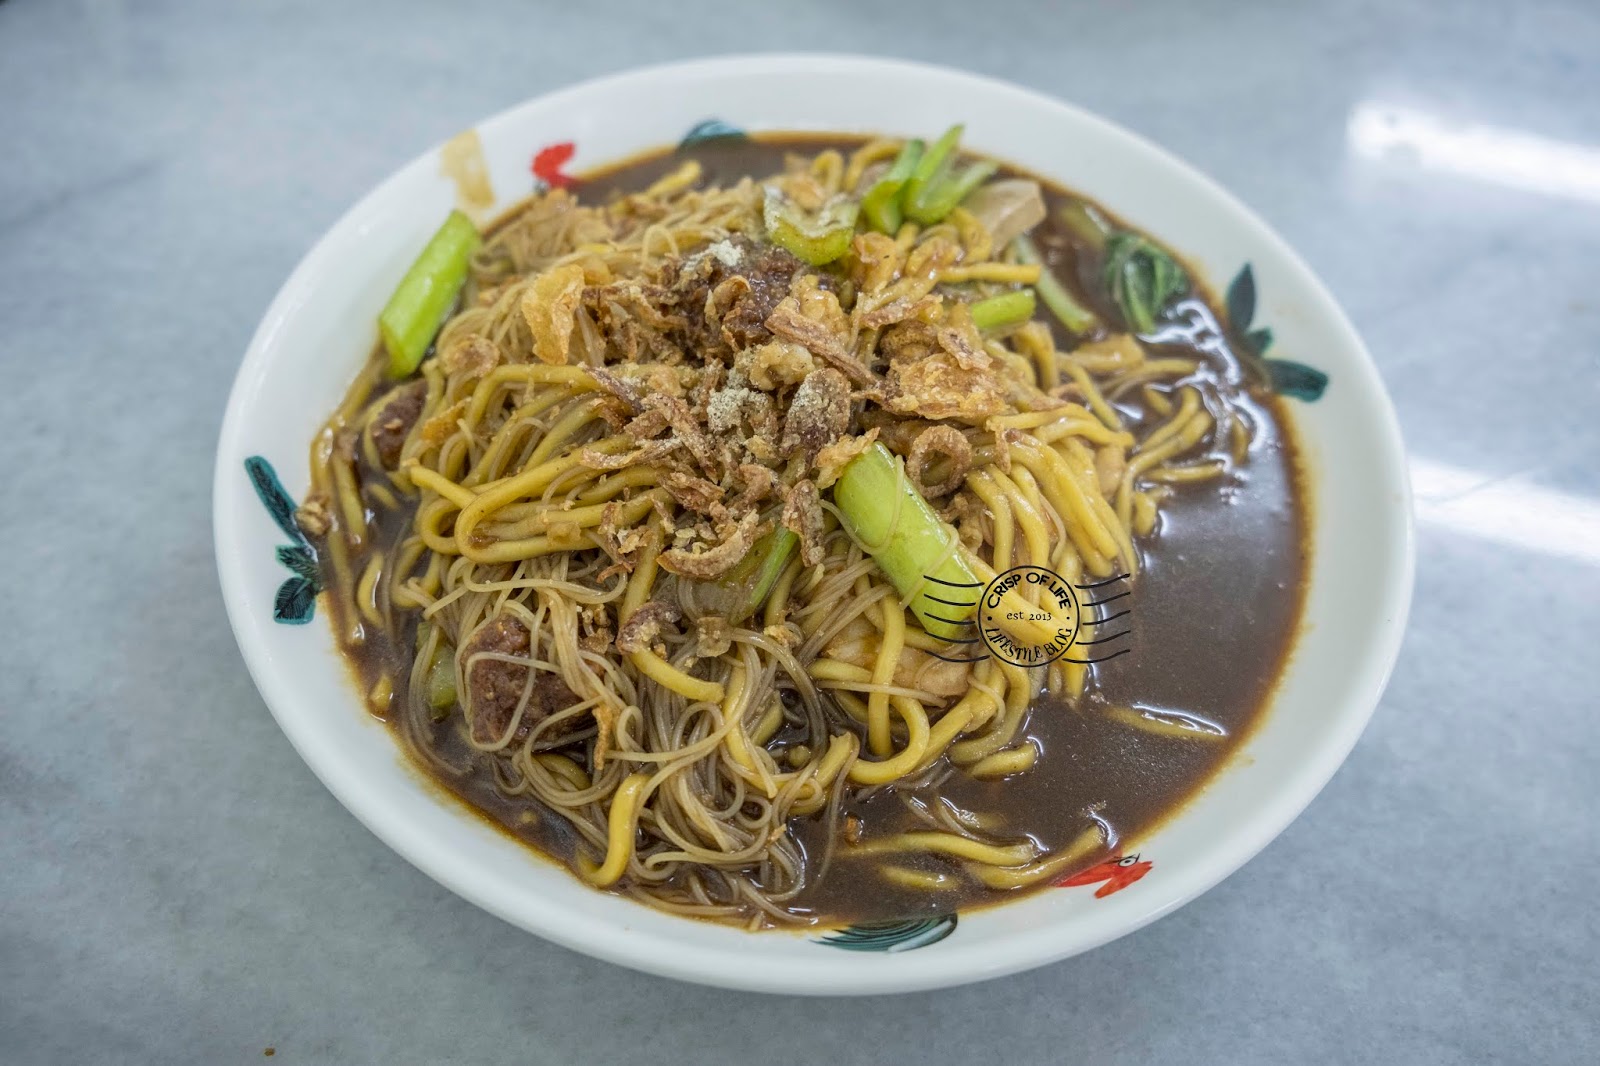 Gou Lou Hong Kee Chao Sar Hor Fun & Noodles 高佬鸿记炭炒沙河粉面食 at Campbell Street, Georgetown, Penang